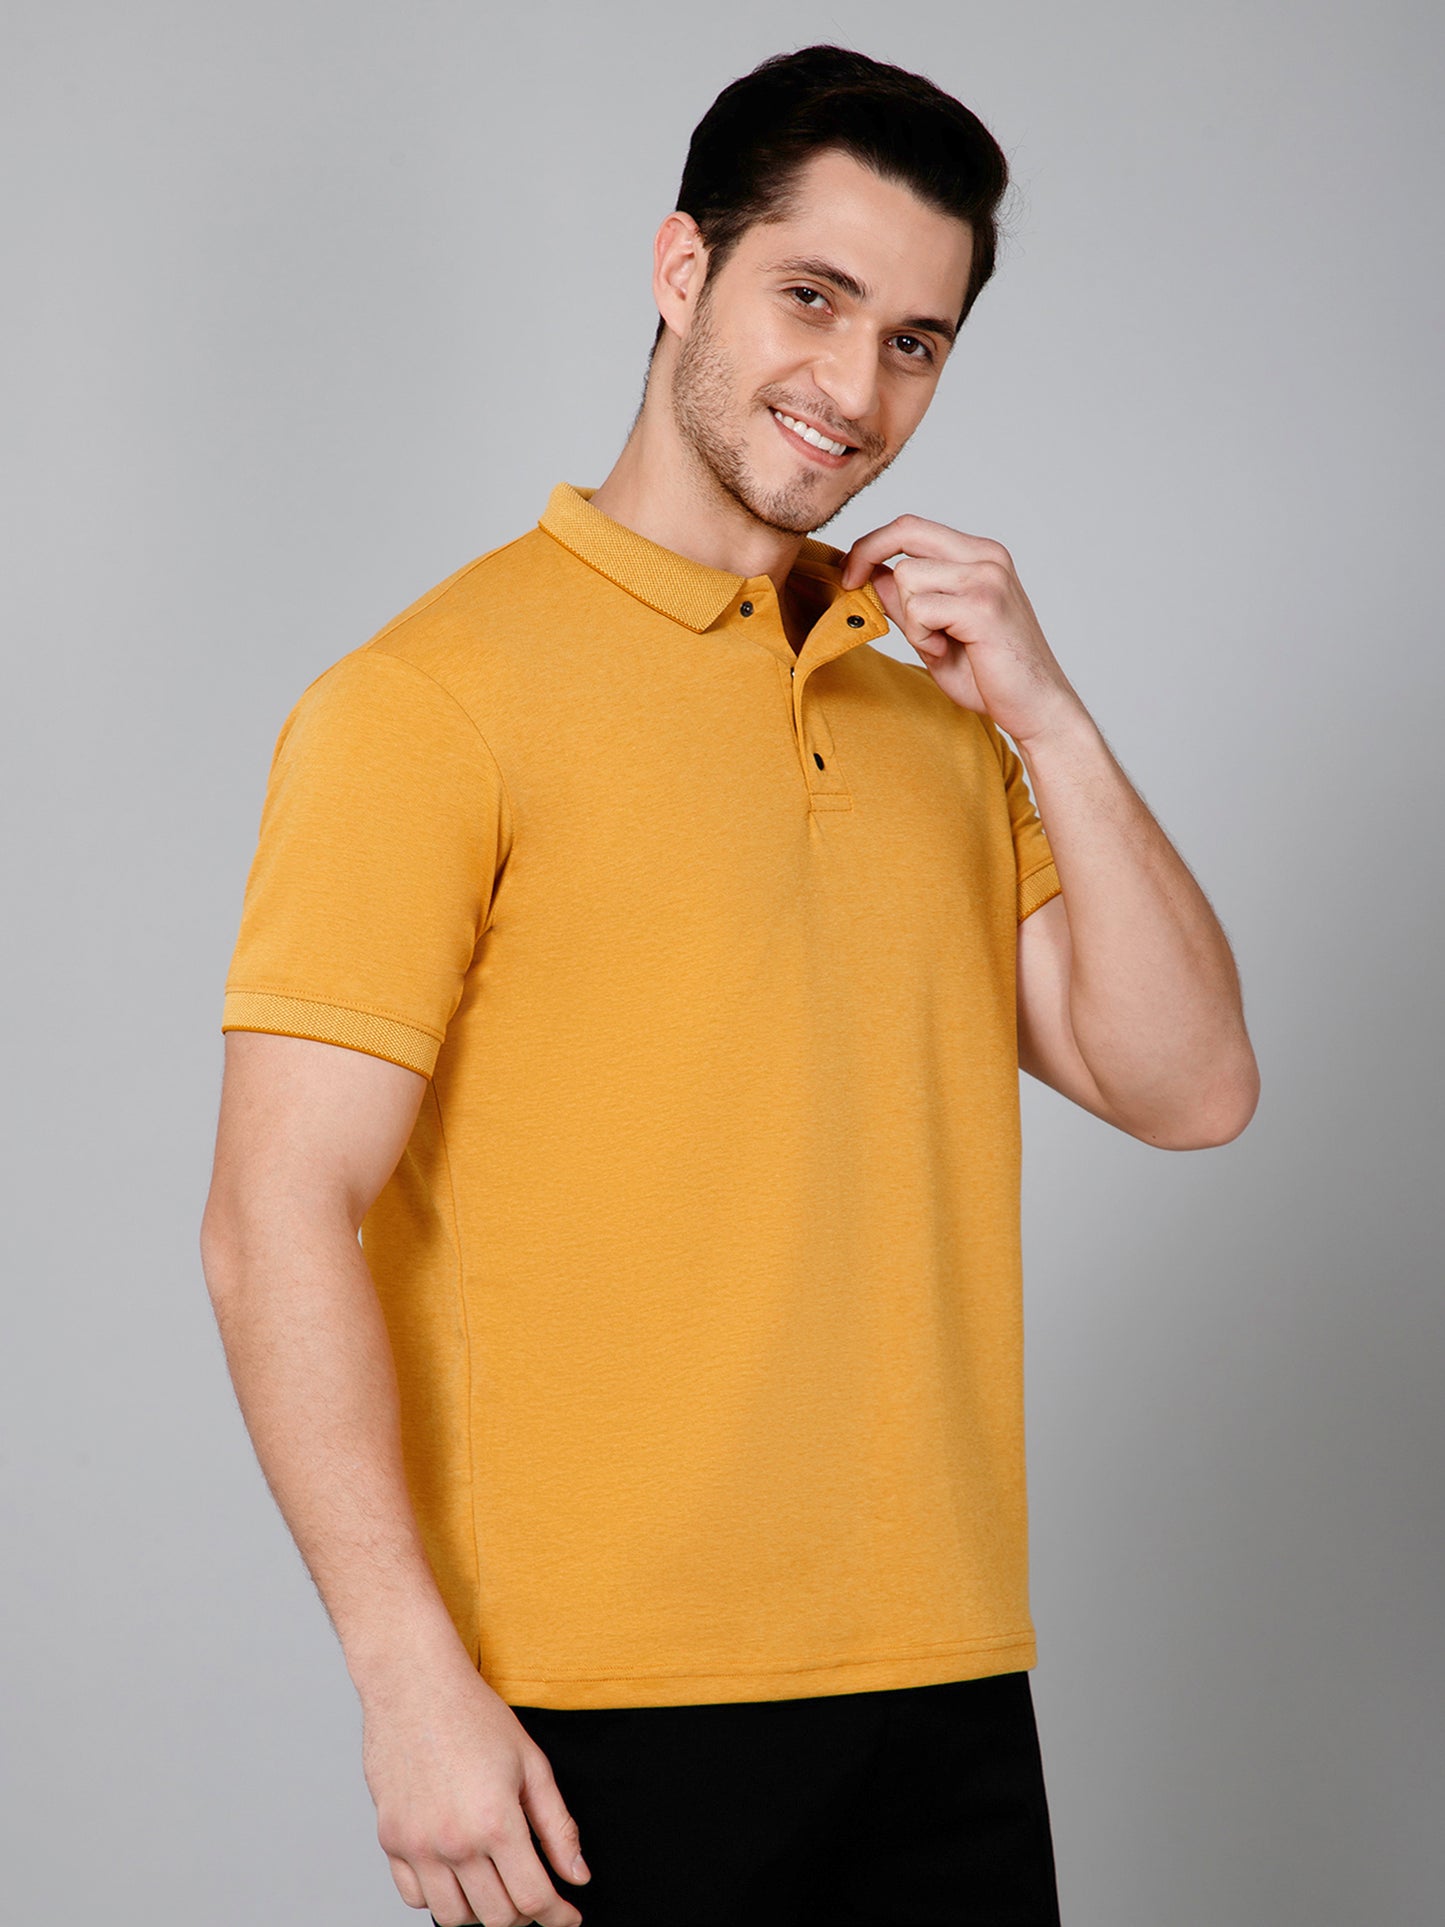 Cross Knit Mustard Polo T-shirt